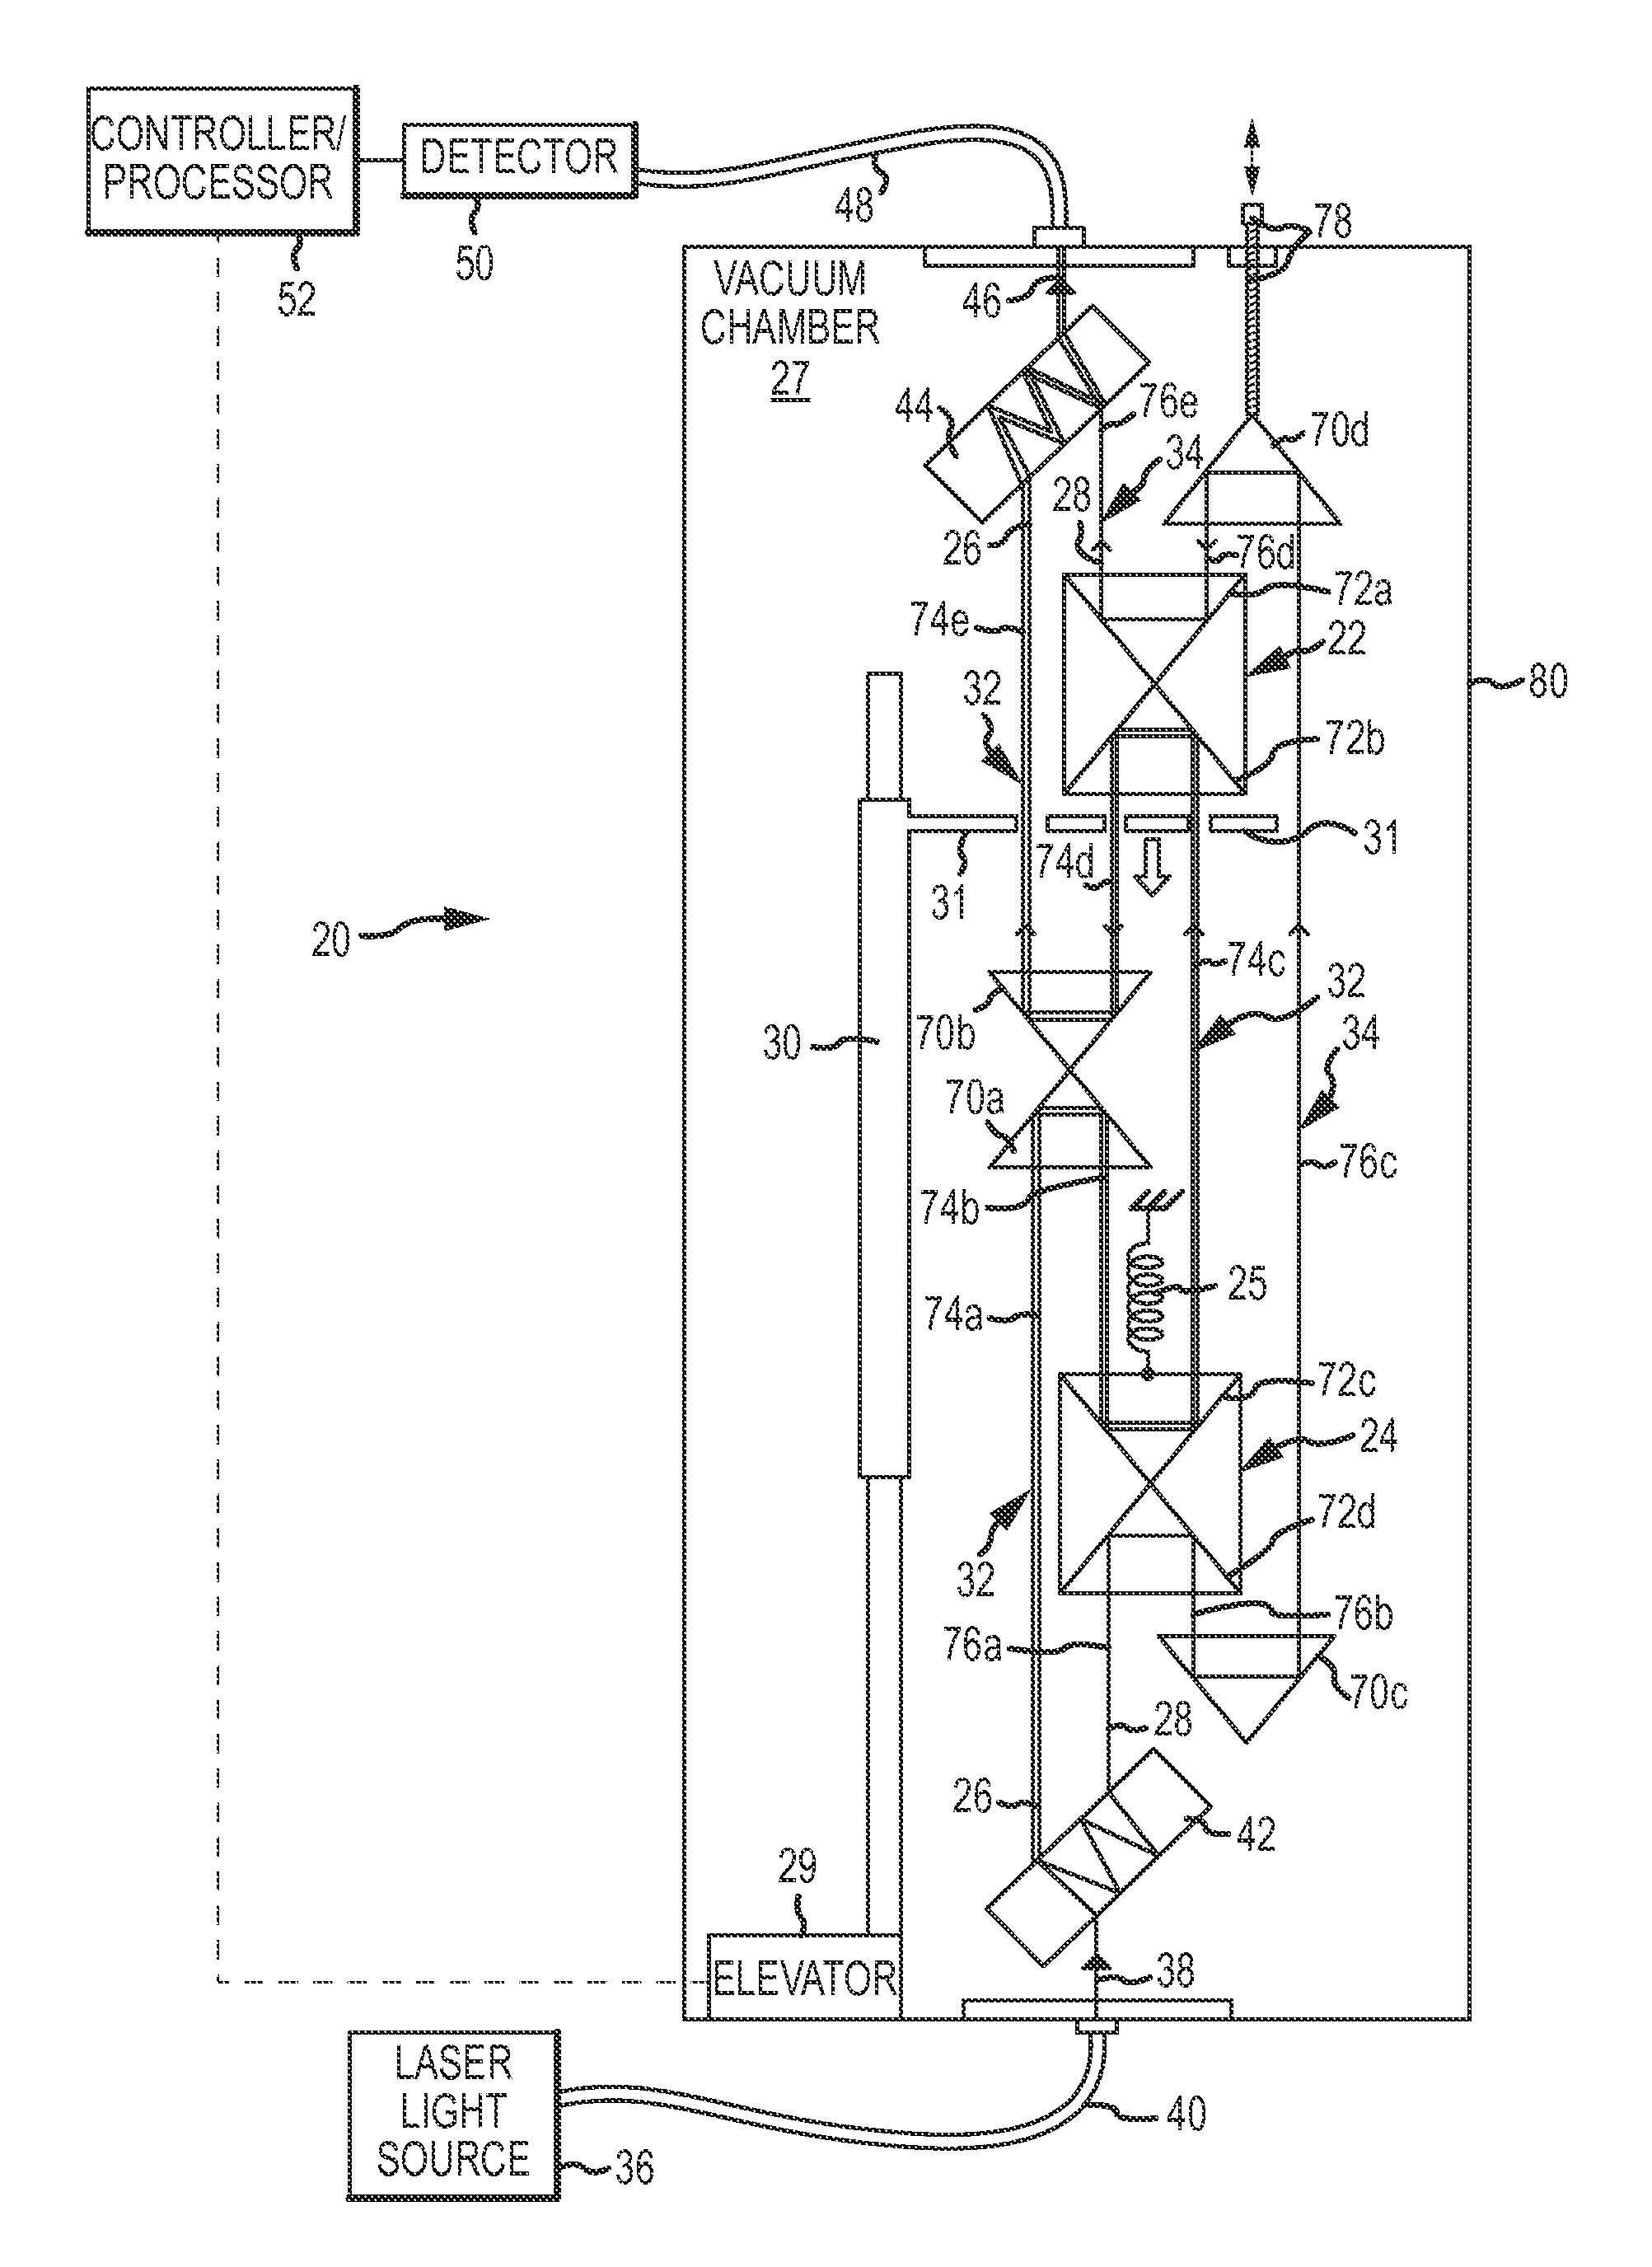 Interferometric gravimeter apparatus and method